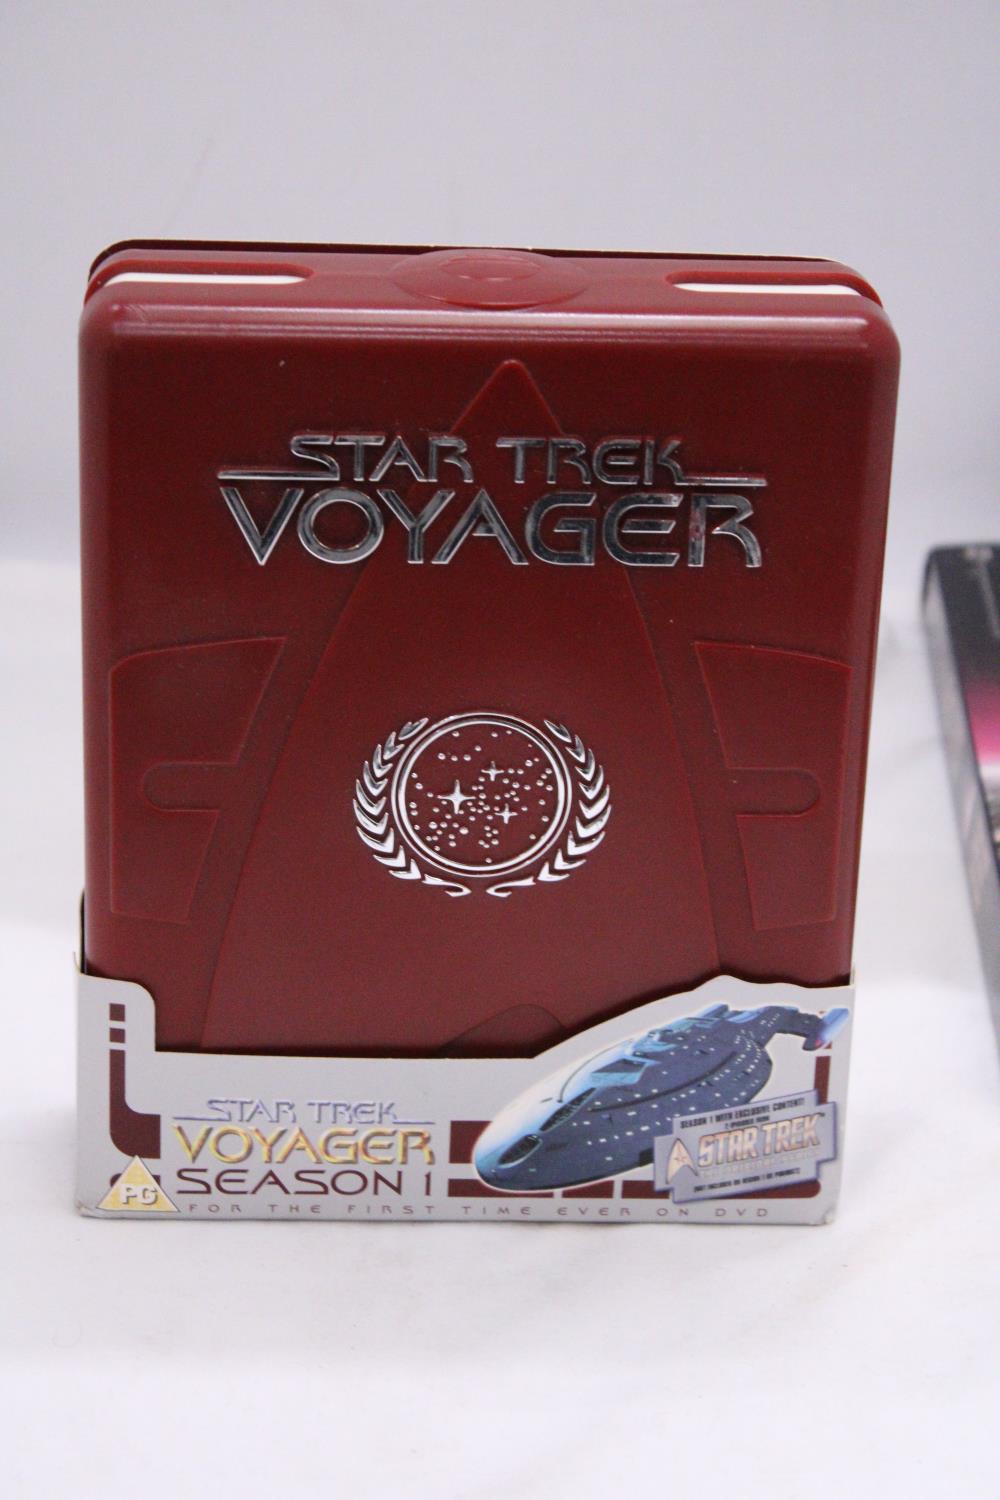 A LARGE STAR TREK ENCYCLOPEDIA AND SPECIAL PACK, SEASON 1, STAR TREK, VOYAGER DVD - Image 3 of 5